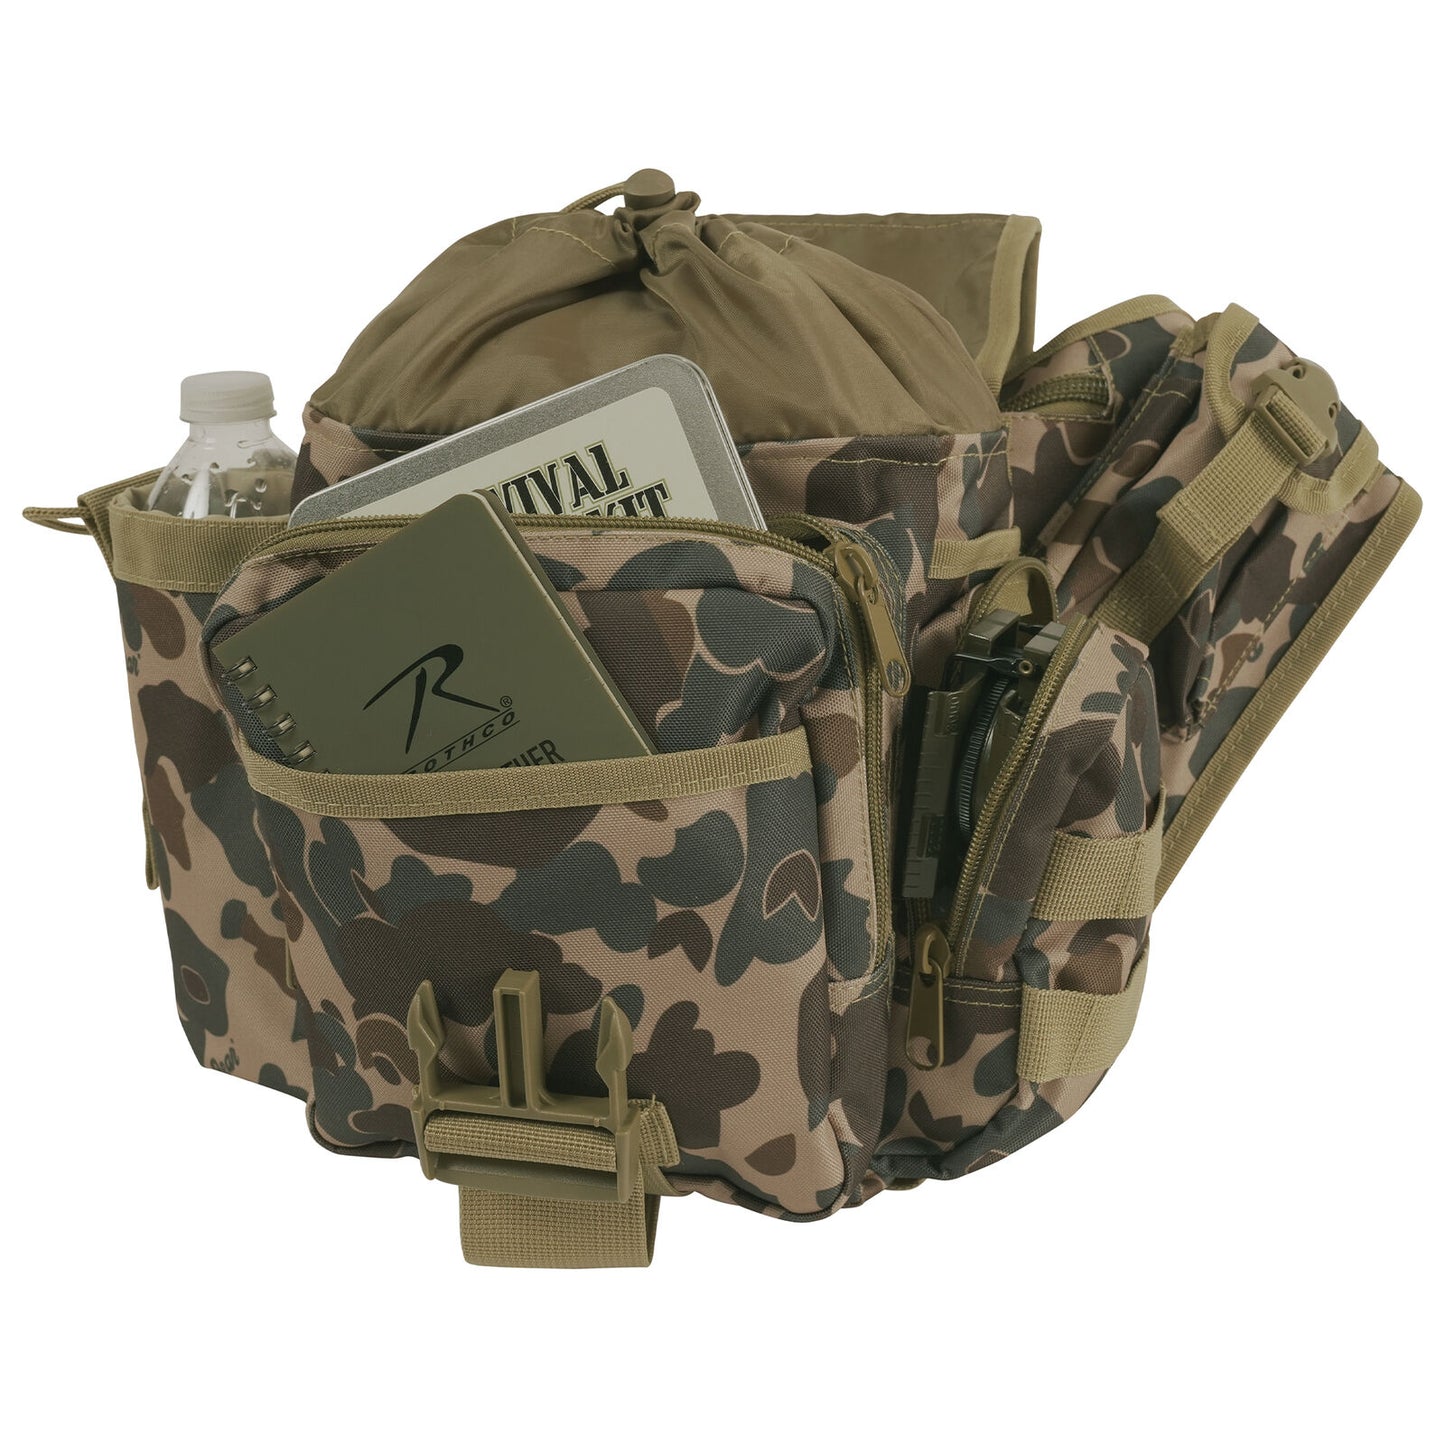 Rothco X Bear Archery Fred Bear Camo Advanced Tactical Bag û Robust Hunting Bag